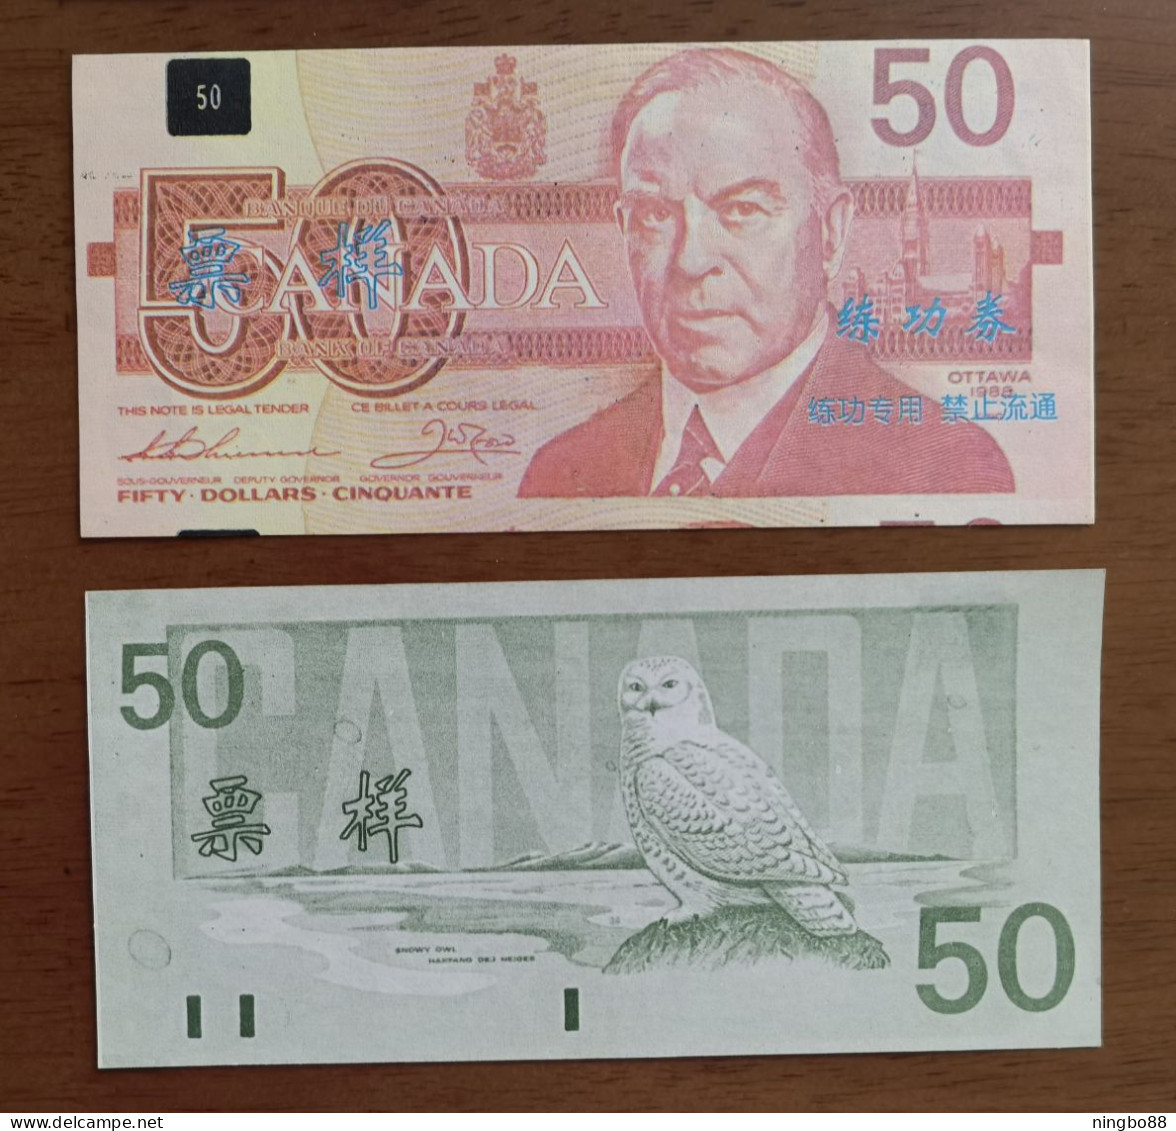 China BOC Bank (bank Of China) Training/test Banknote,Canada Dollars B-3 Series $50 Note Specimen Overprint - Kanada